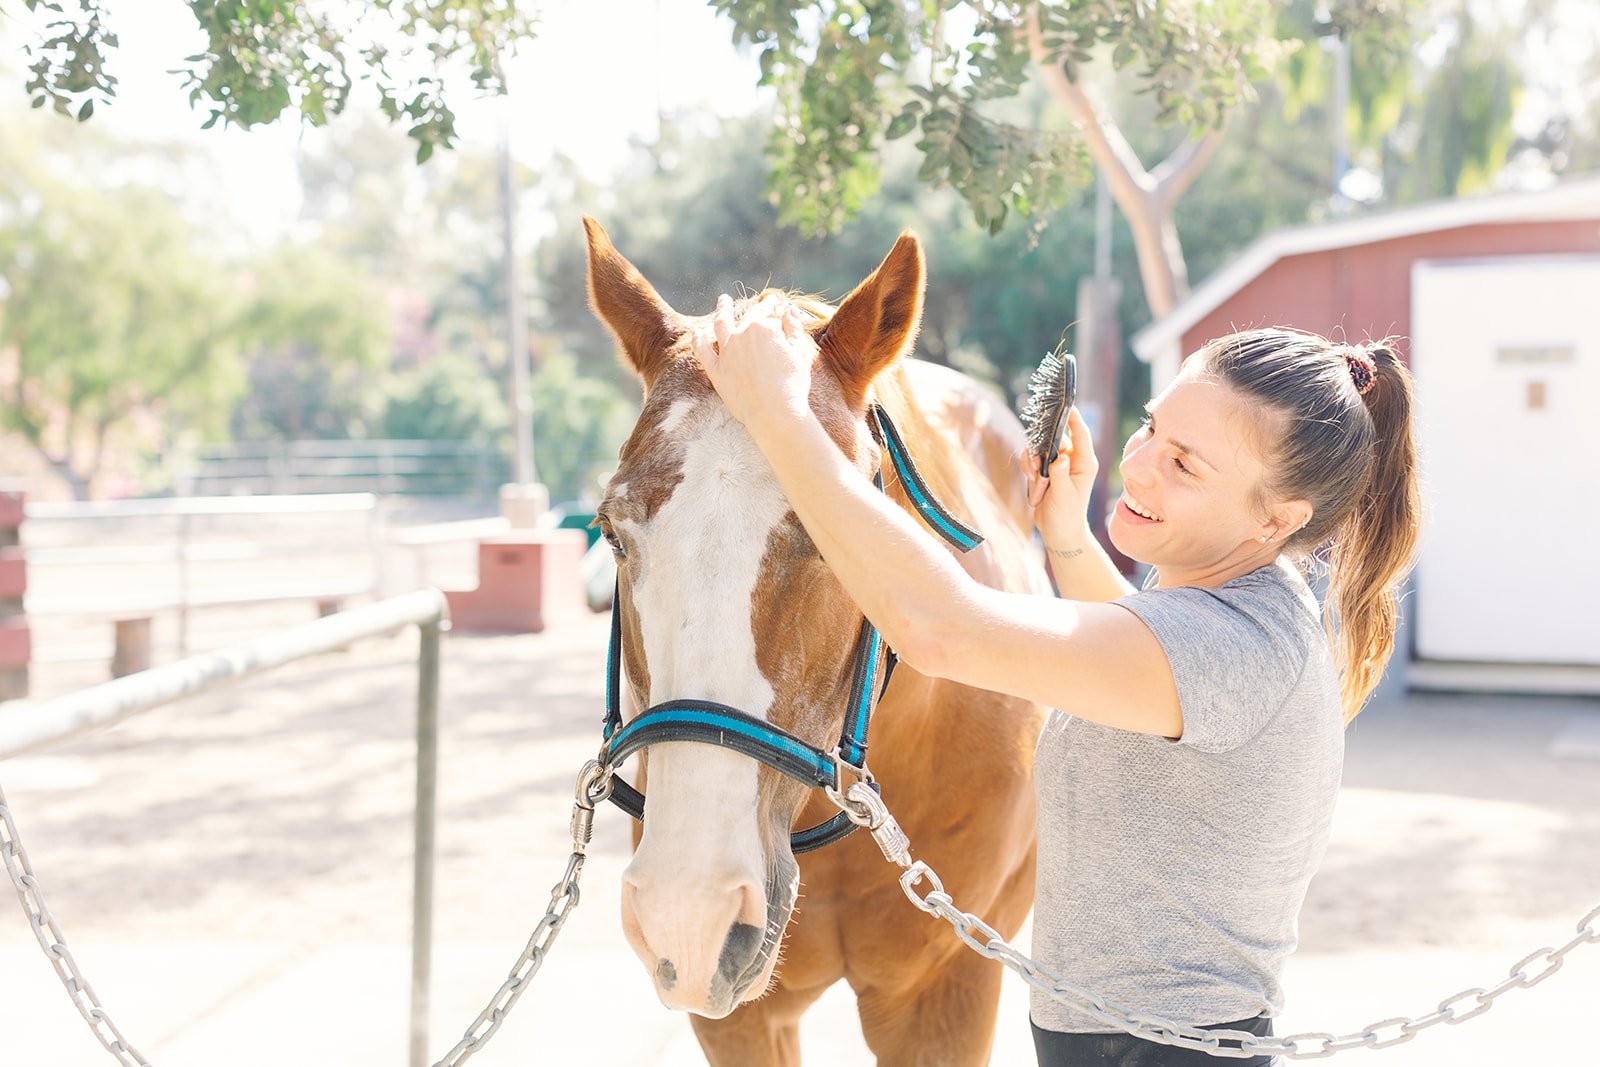 Girl wearing gray shirt brushing horse at ranch